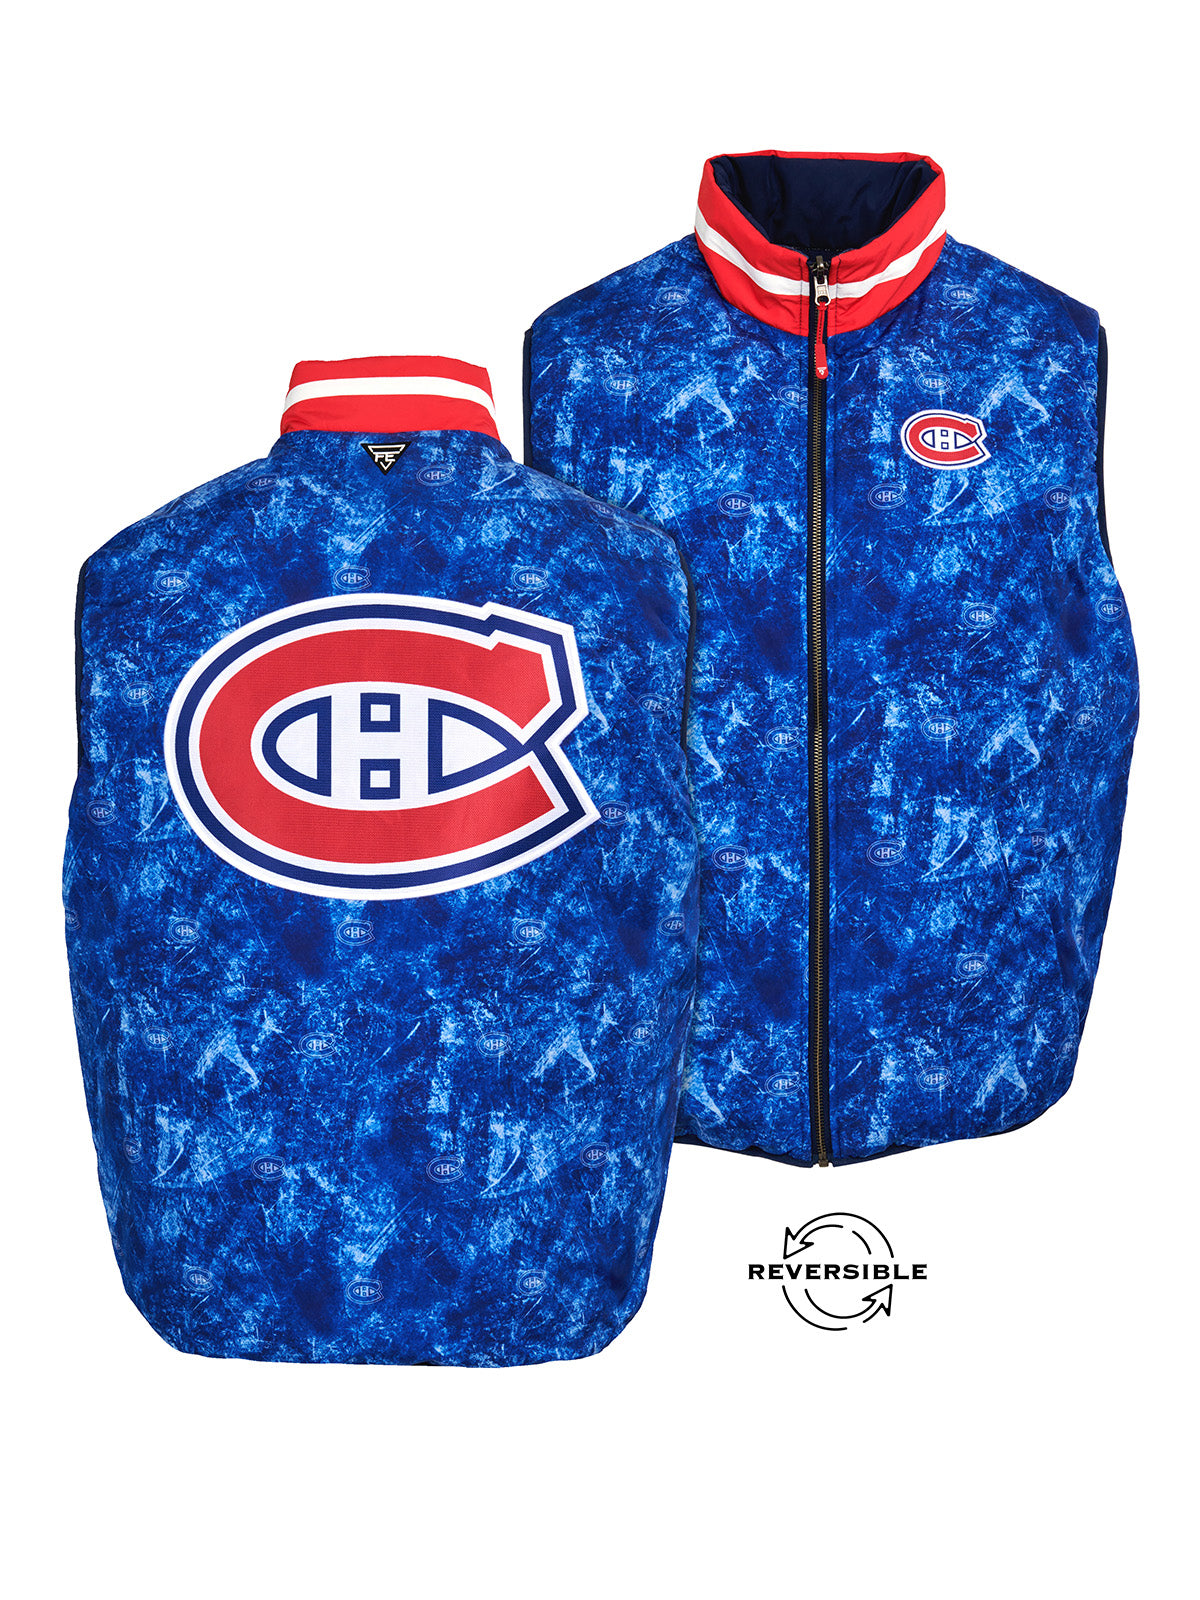 Montreal Canadiens Reversible Vest